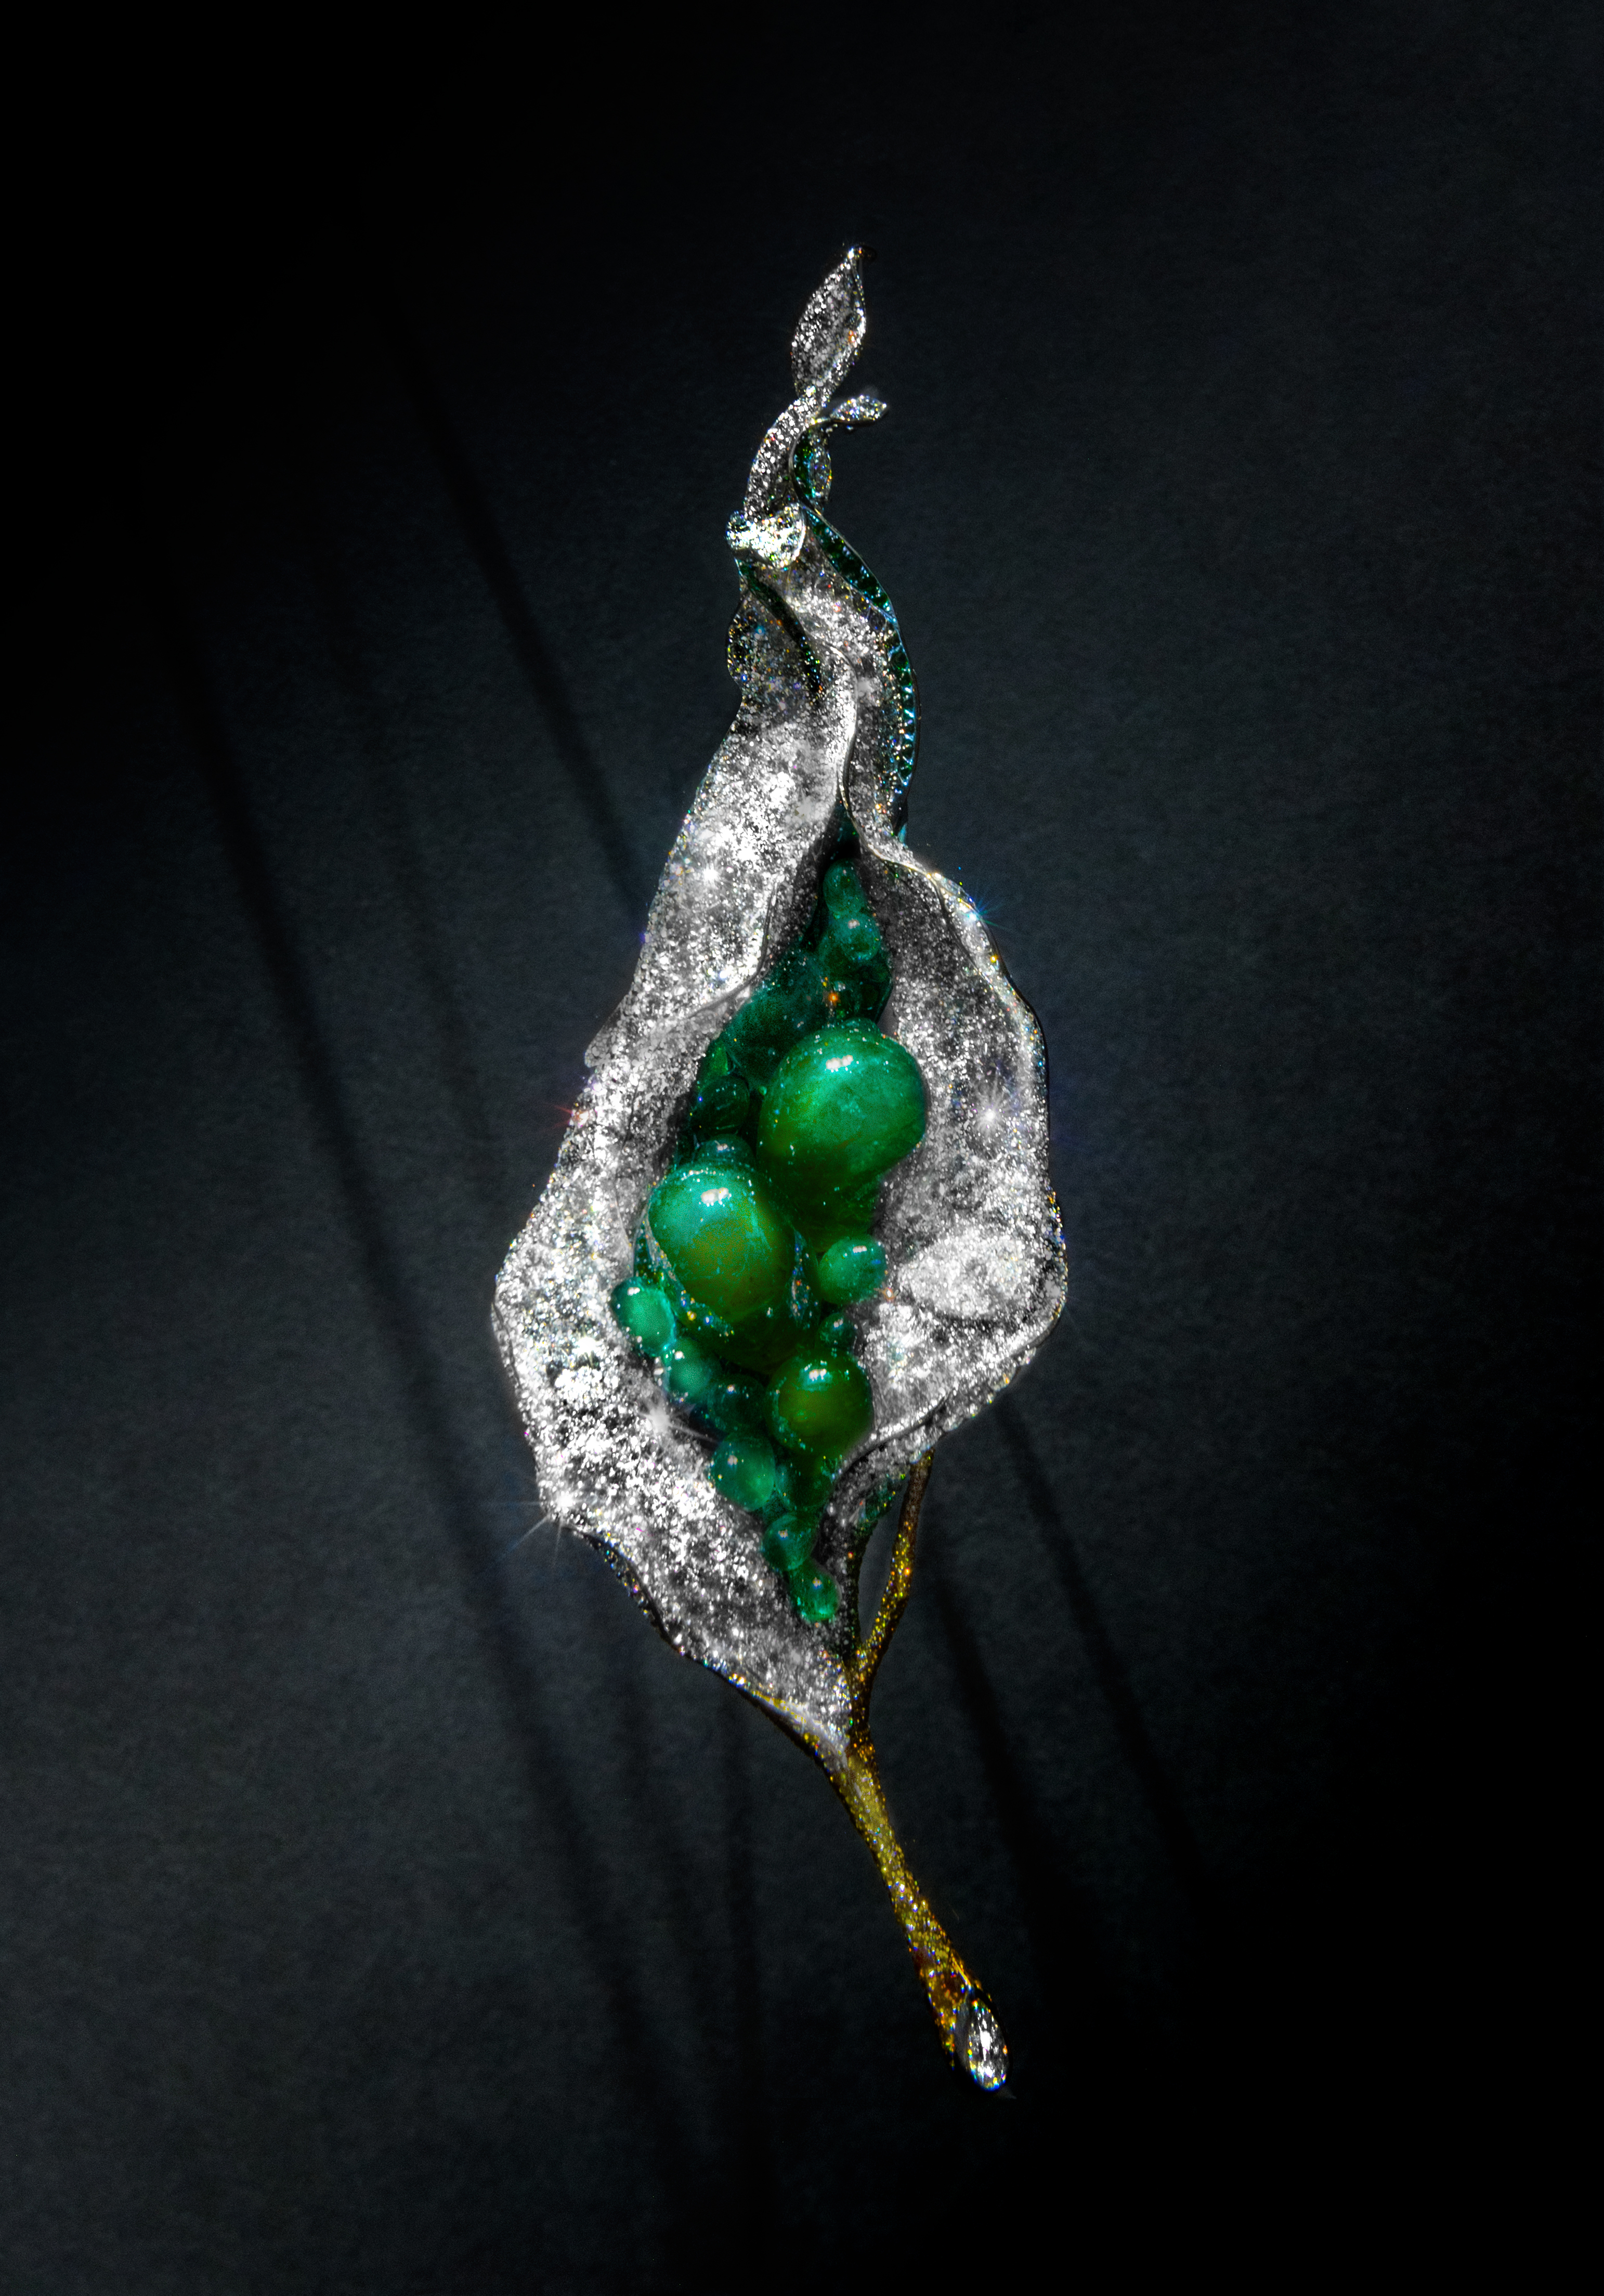 [Image] CINDY CHAO The Art Jewel Flower Bud Brooch